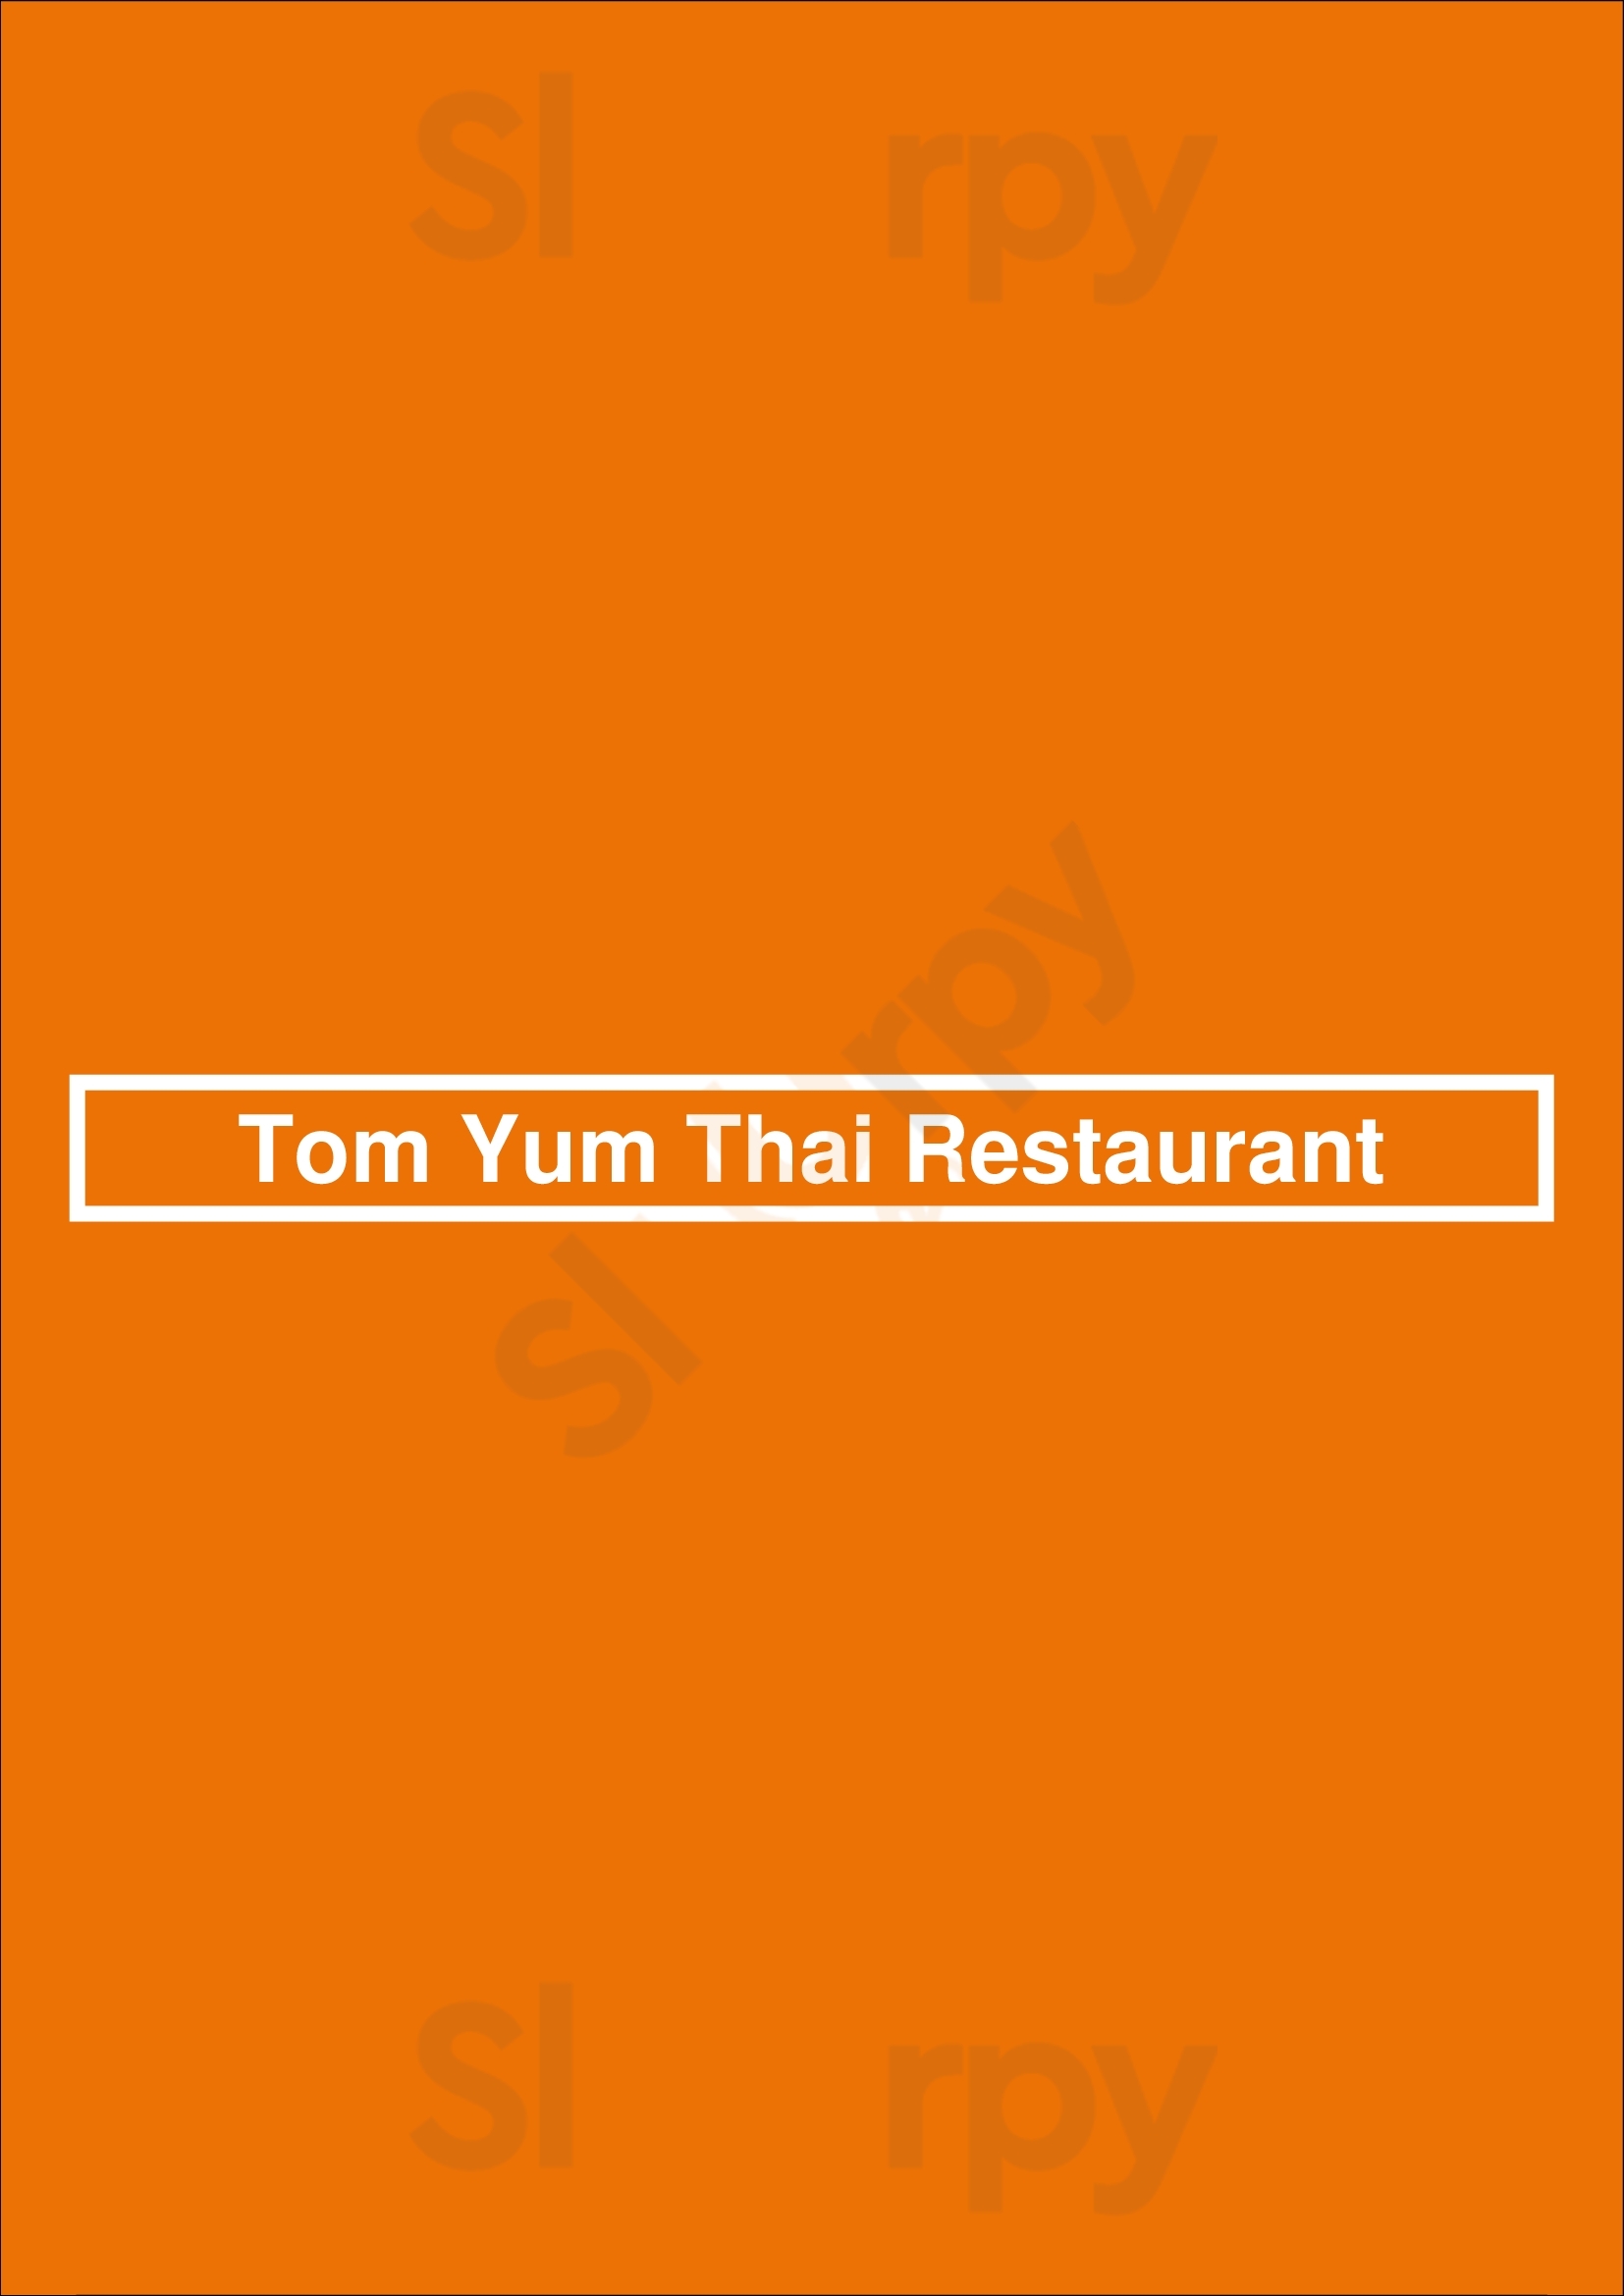 Tom Yum Thai Restaurant Winnipeg Menu - 1